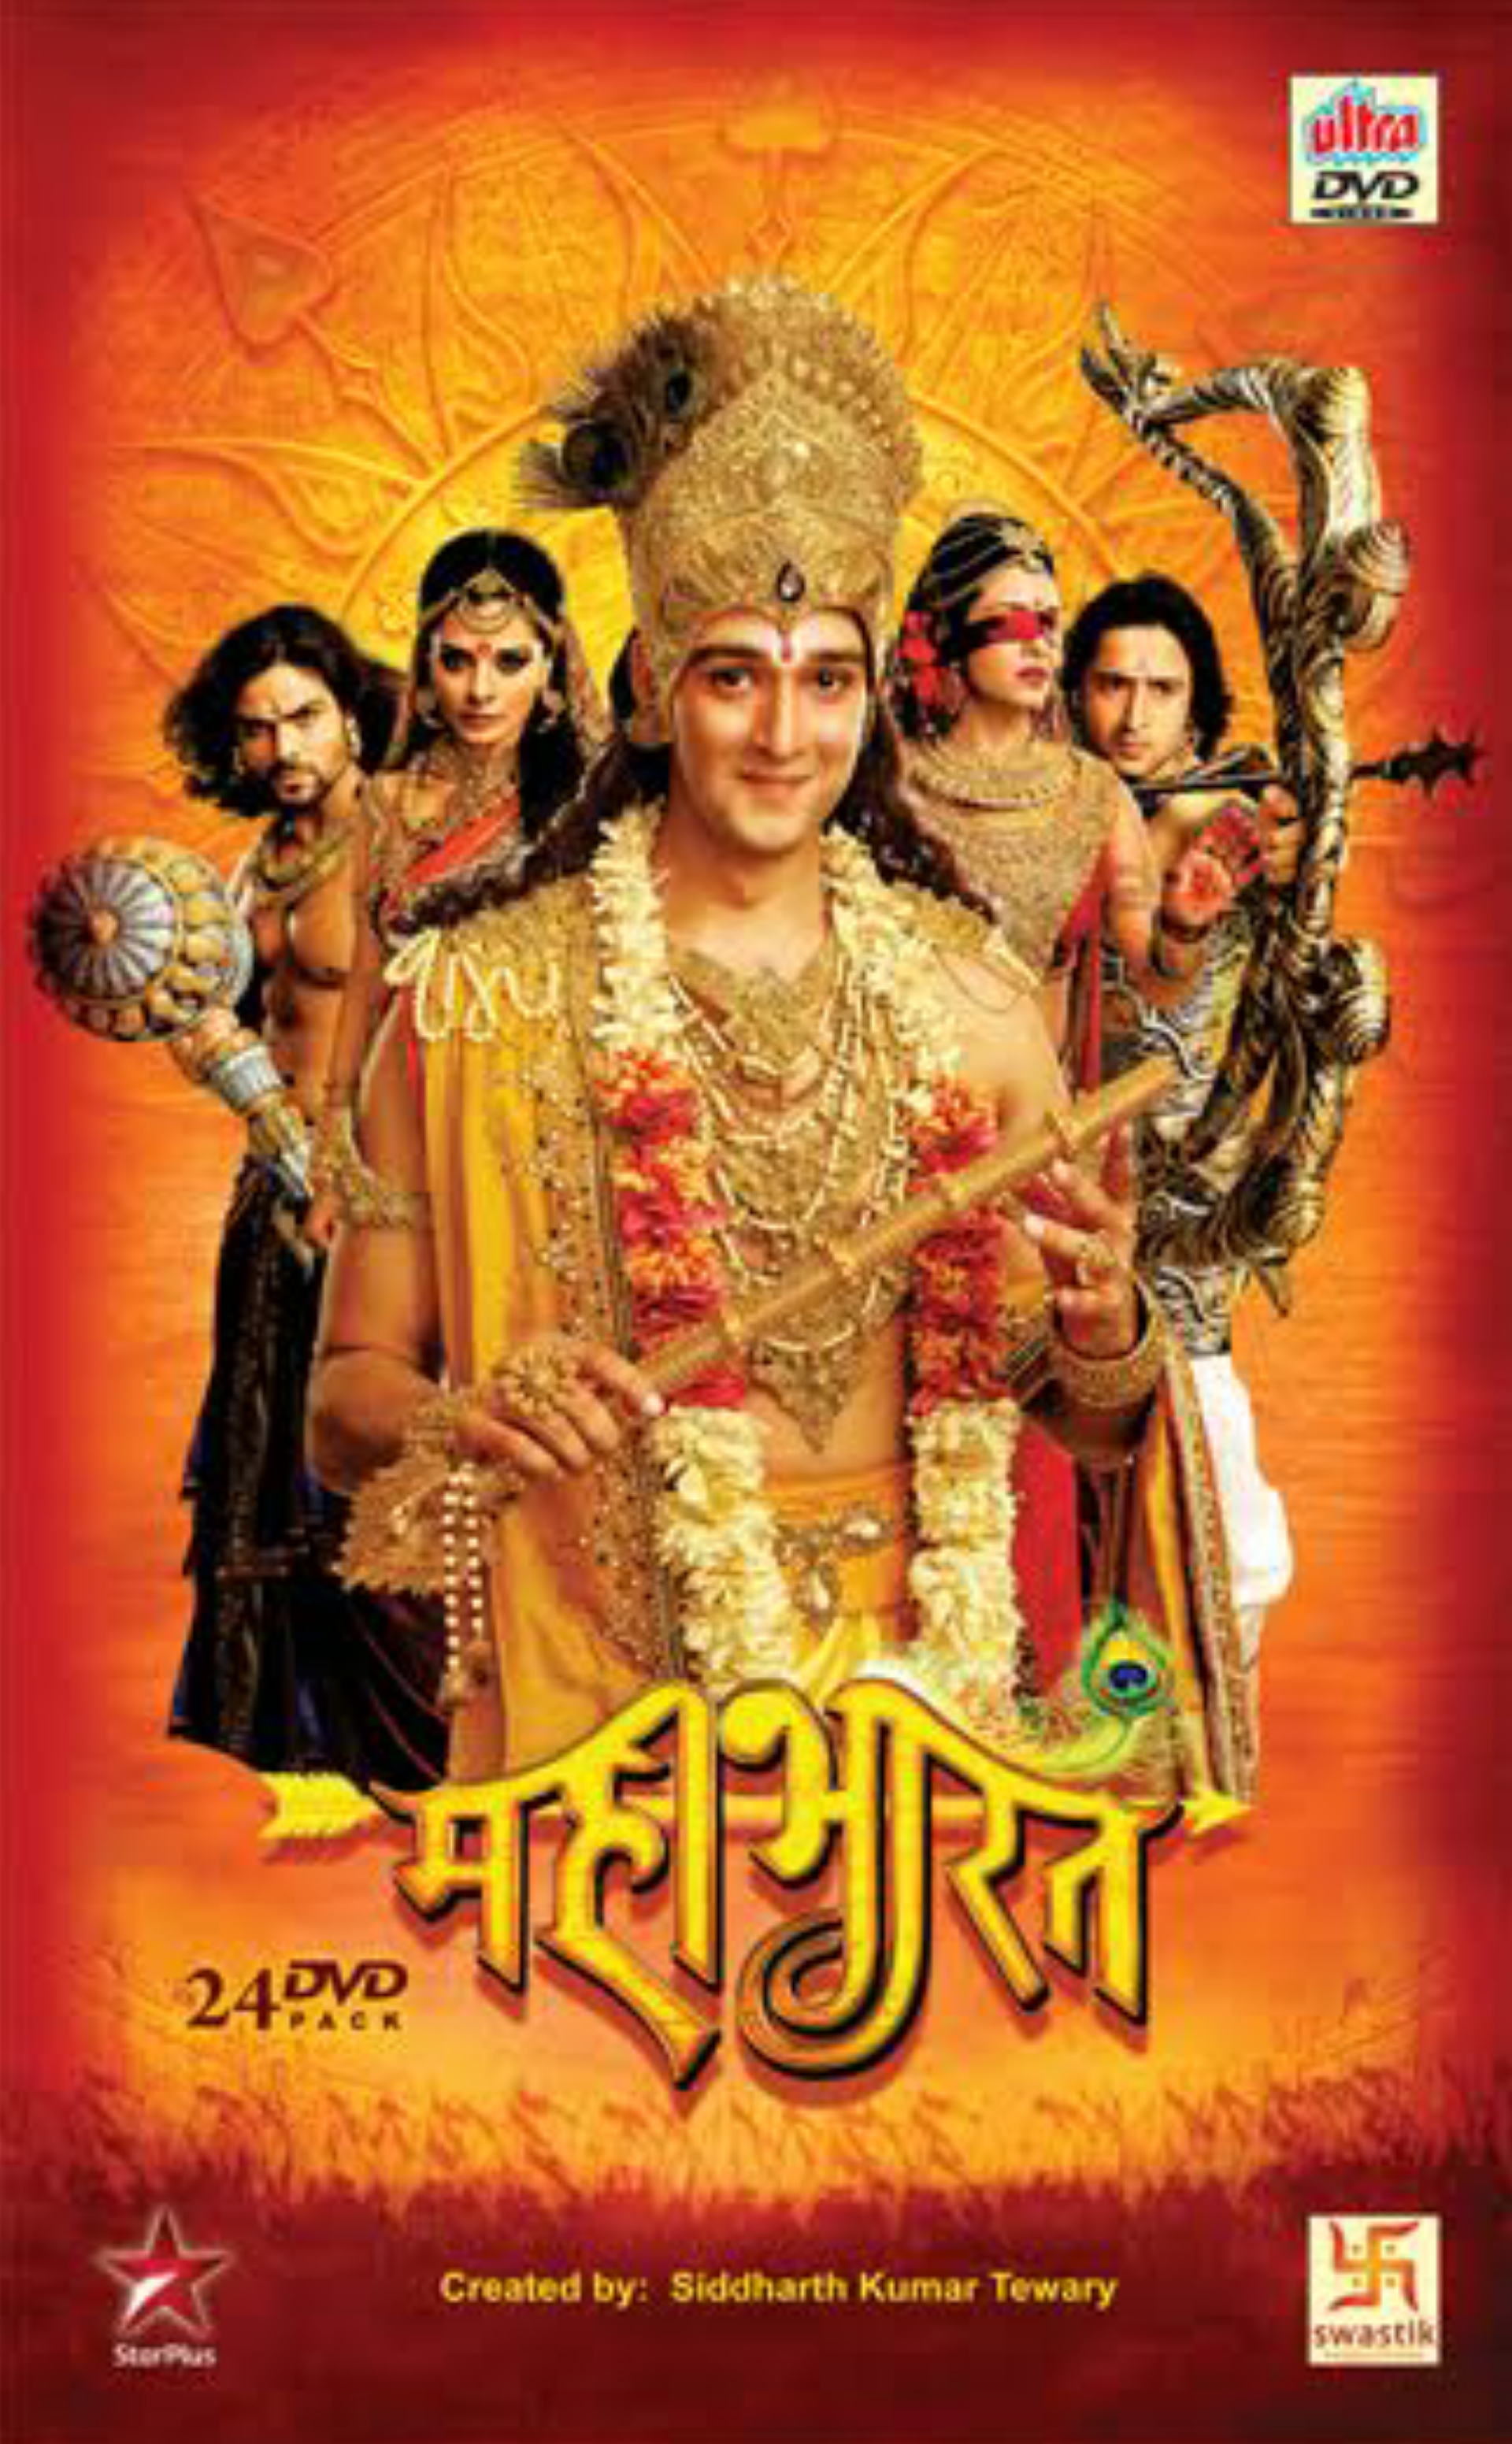 download film mahabharata antv full episode bahasa indonesia